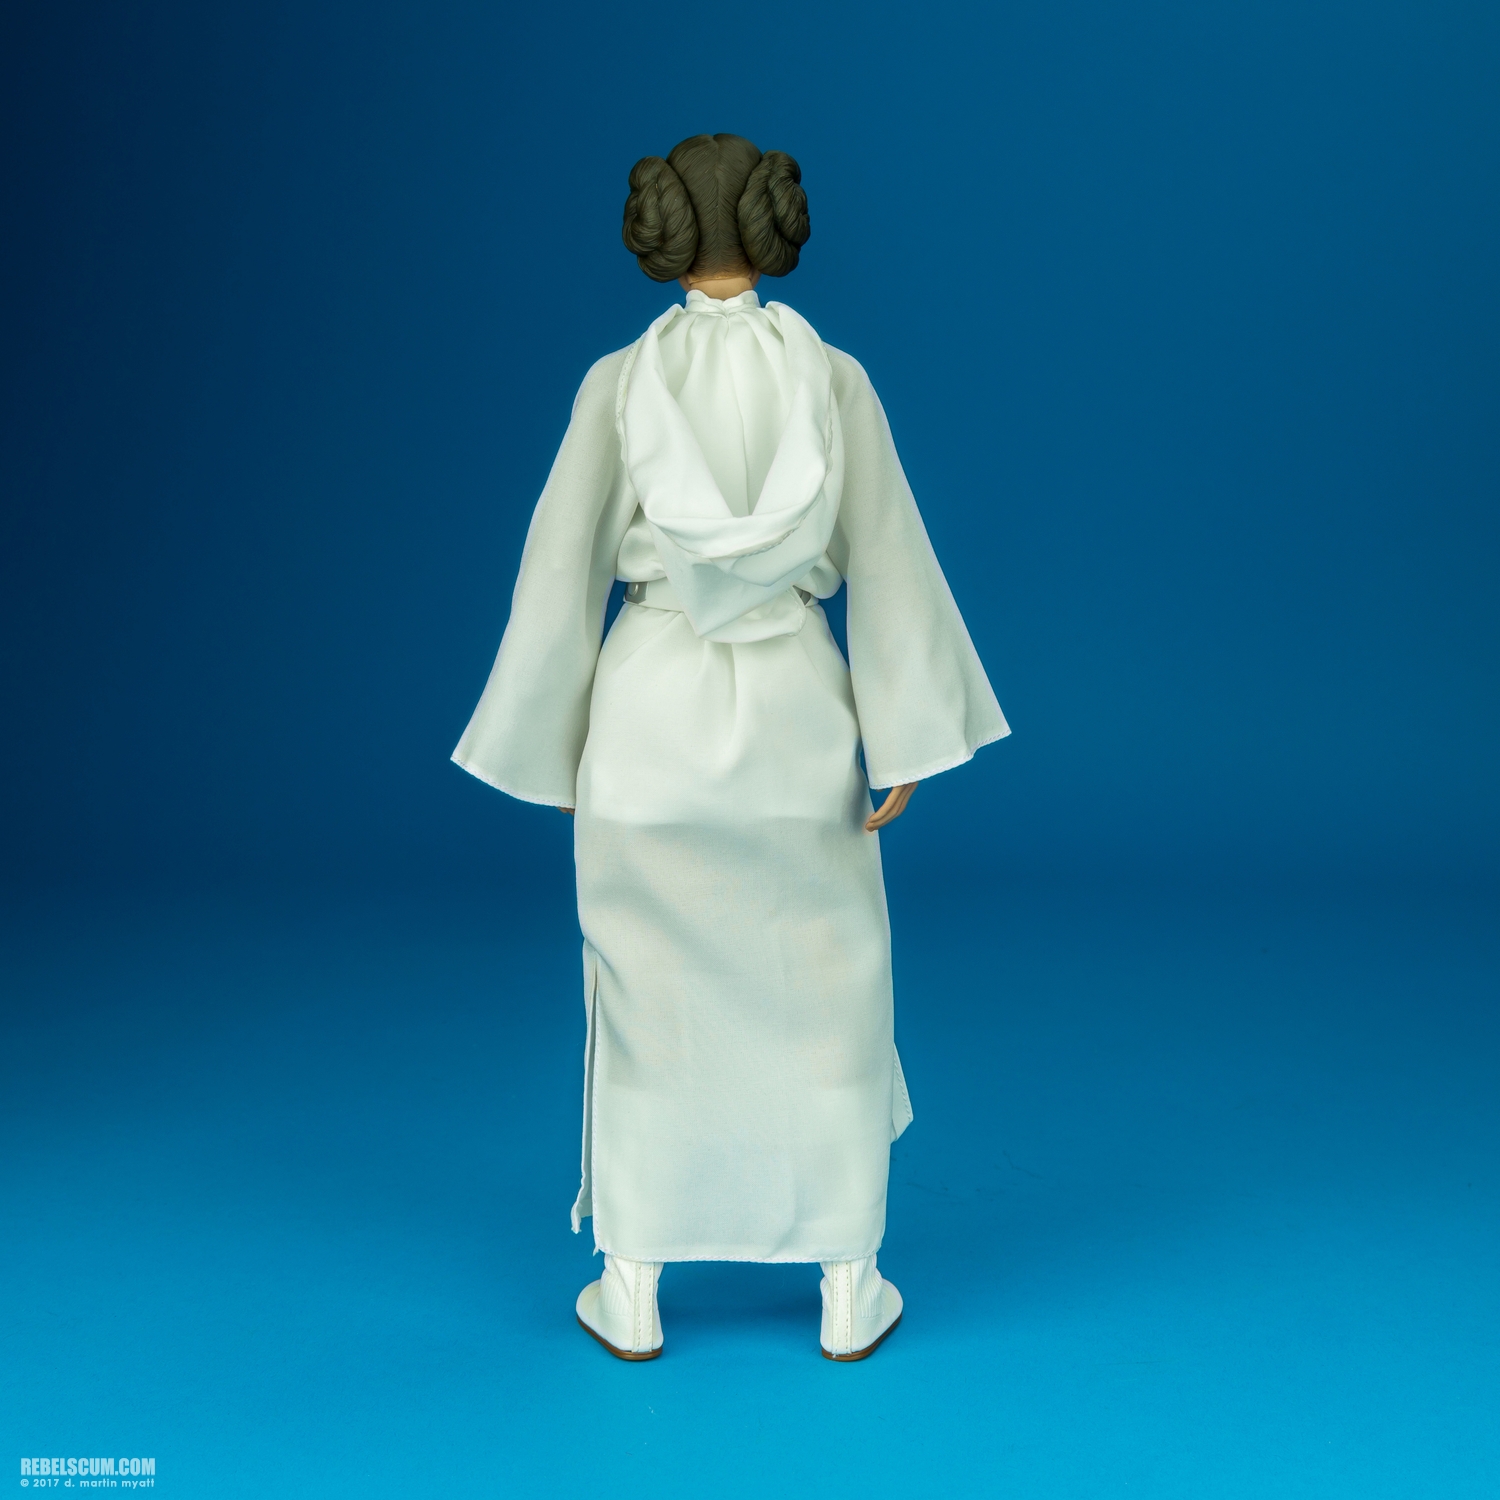 Hot-Toys-MMS298-Princess-Leia-Collectible-Figure-004.jpg